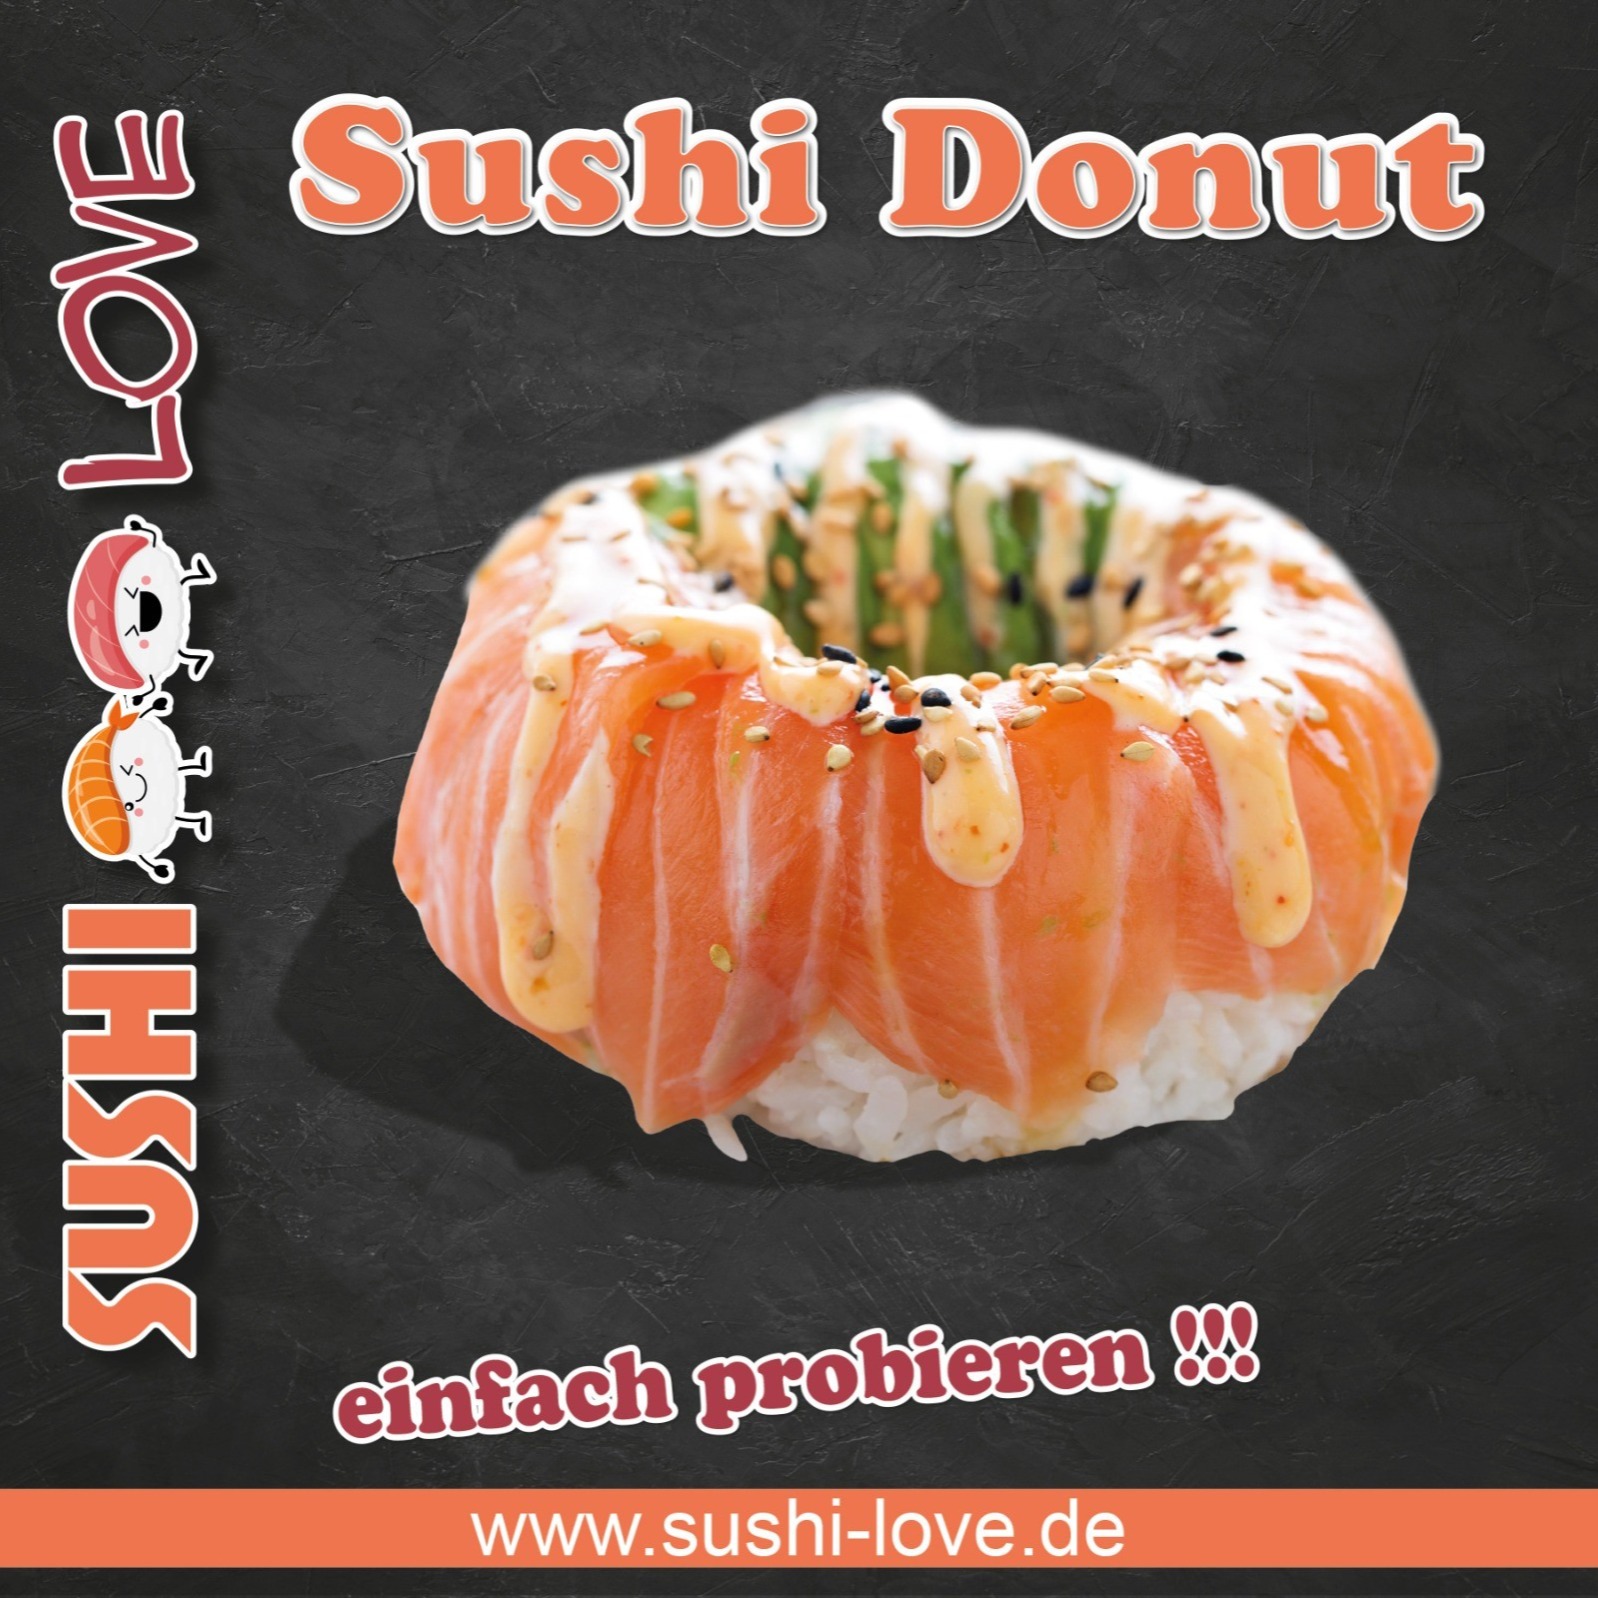 Sushi Love, Überseering 5 in Hamburg